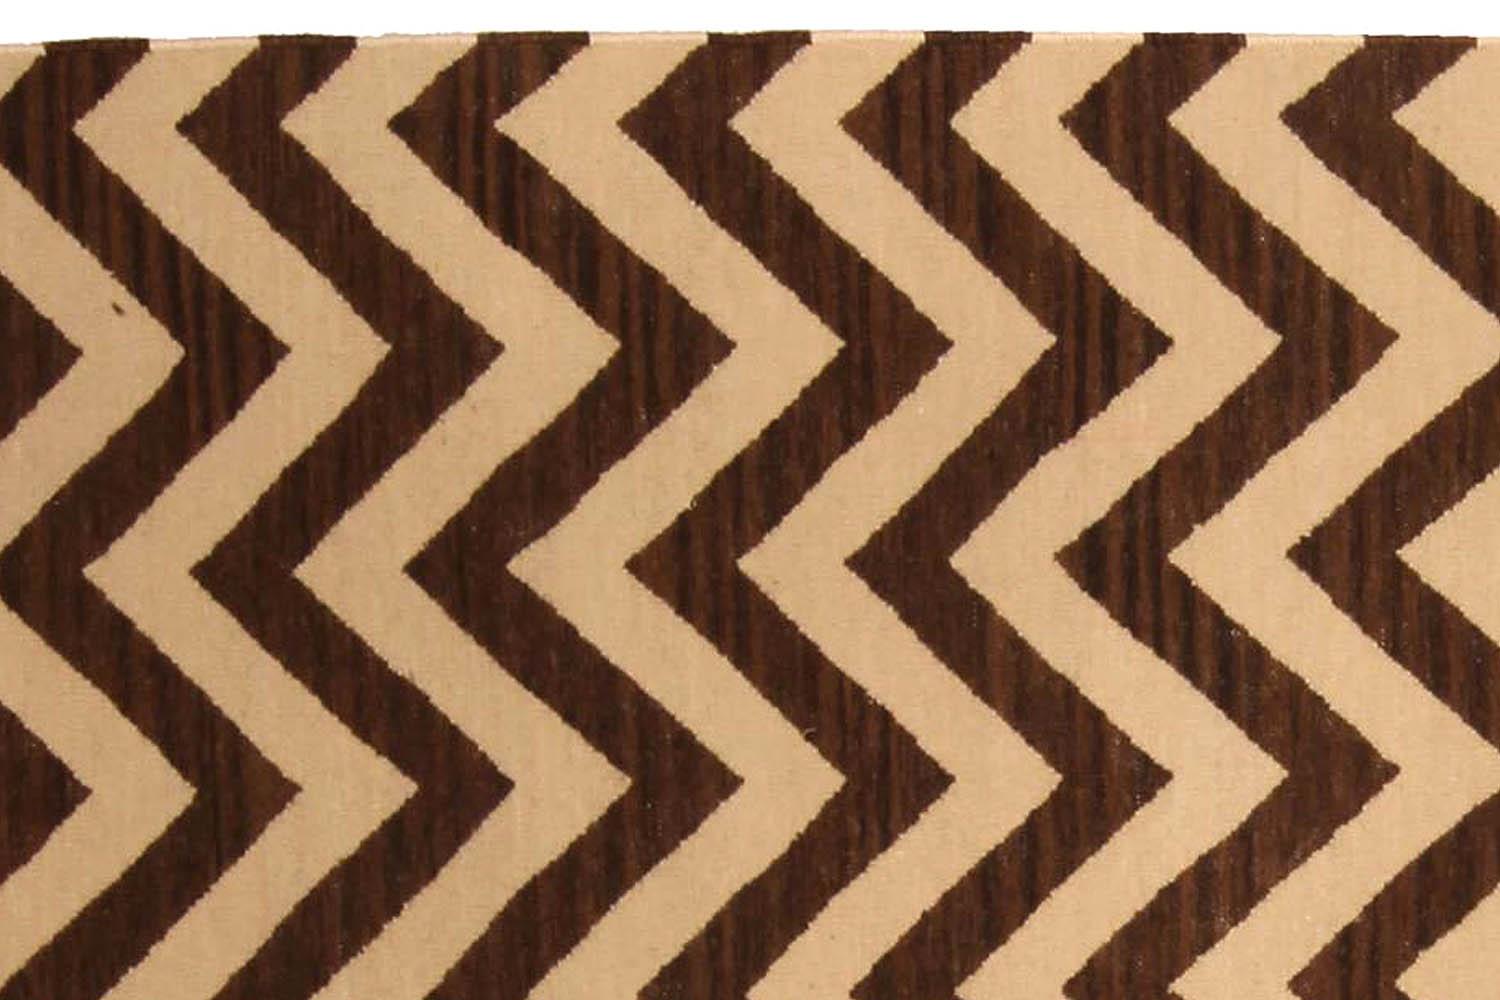 Contemporary Modern Zig-Zag Design Handmade Wool Rug in Brown and Beige by Doris Leslie Blau For Sale